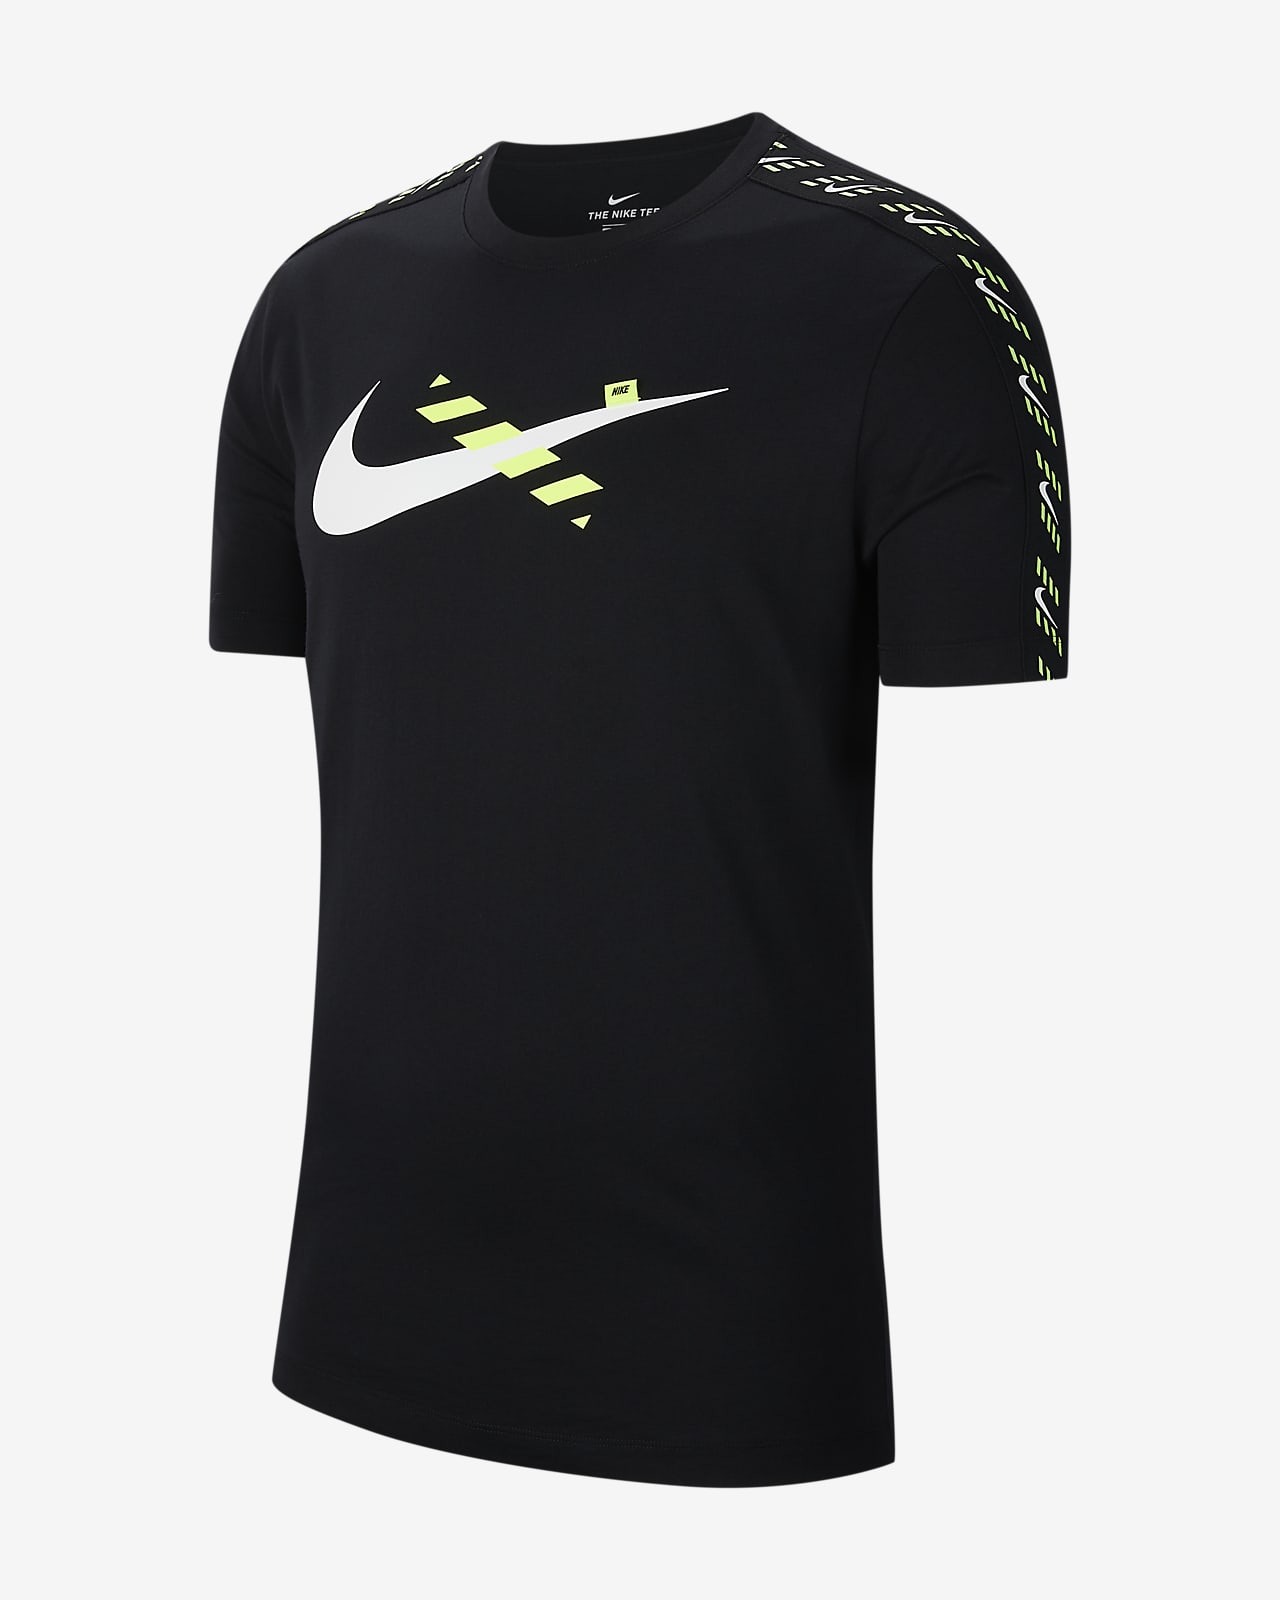 Nike Sportswear Swoosh Men #39 s T Shirt Nike com